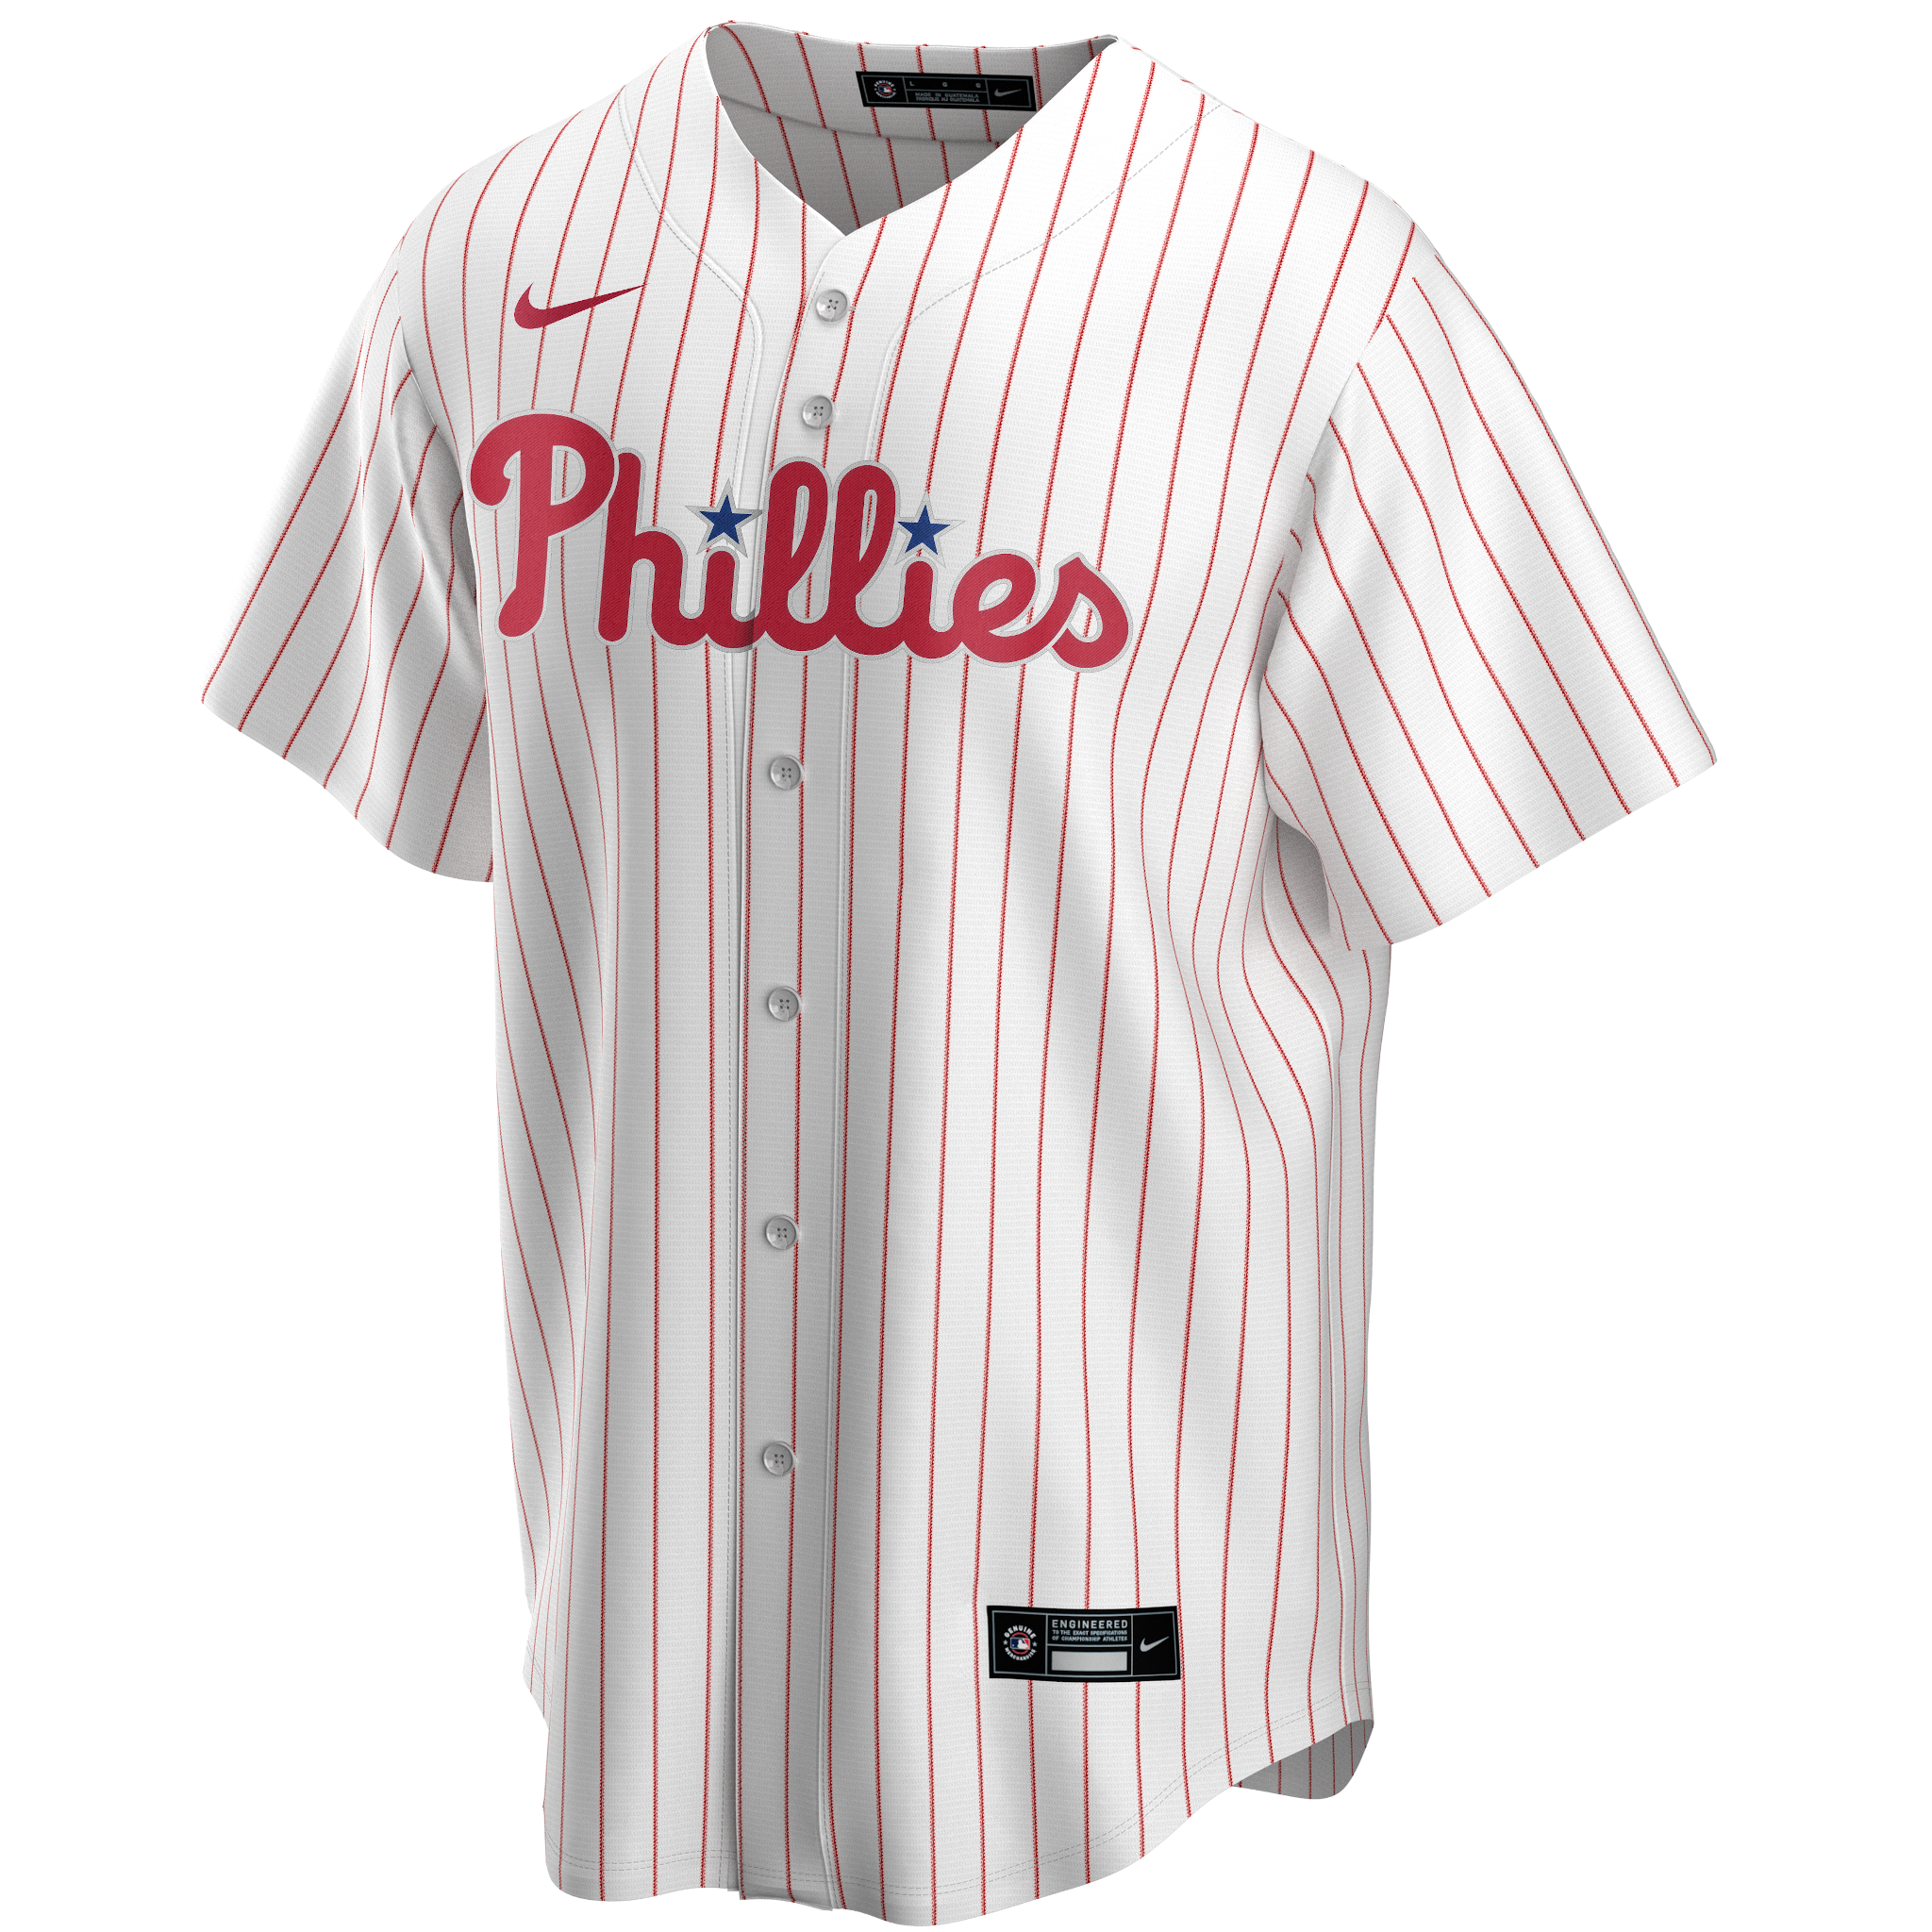 philadelphia baseball jersey